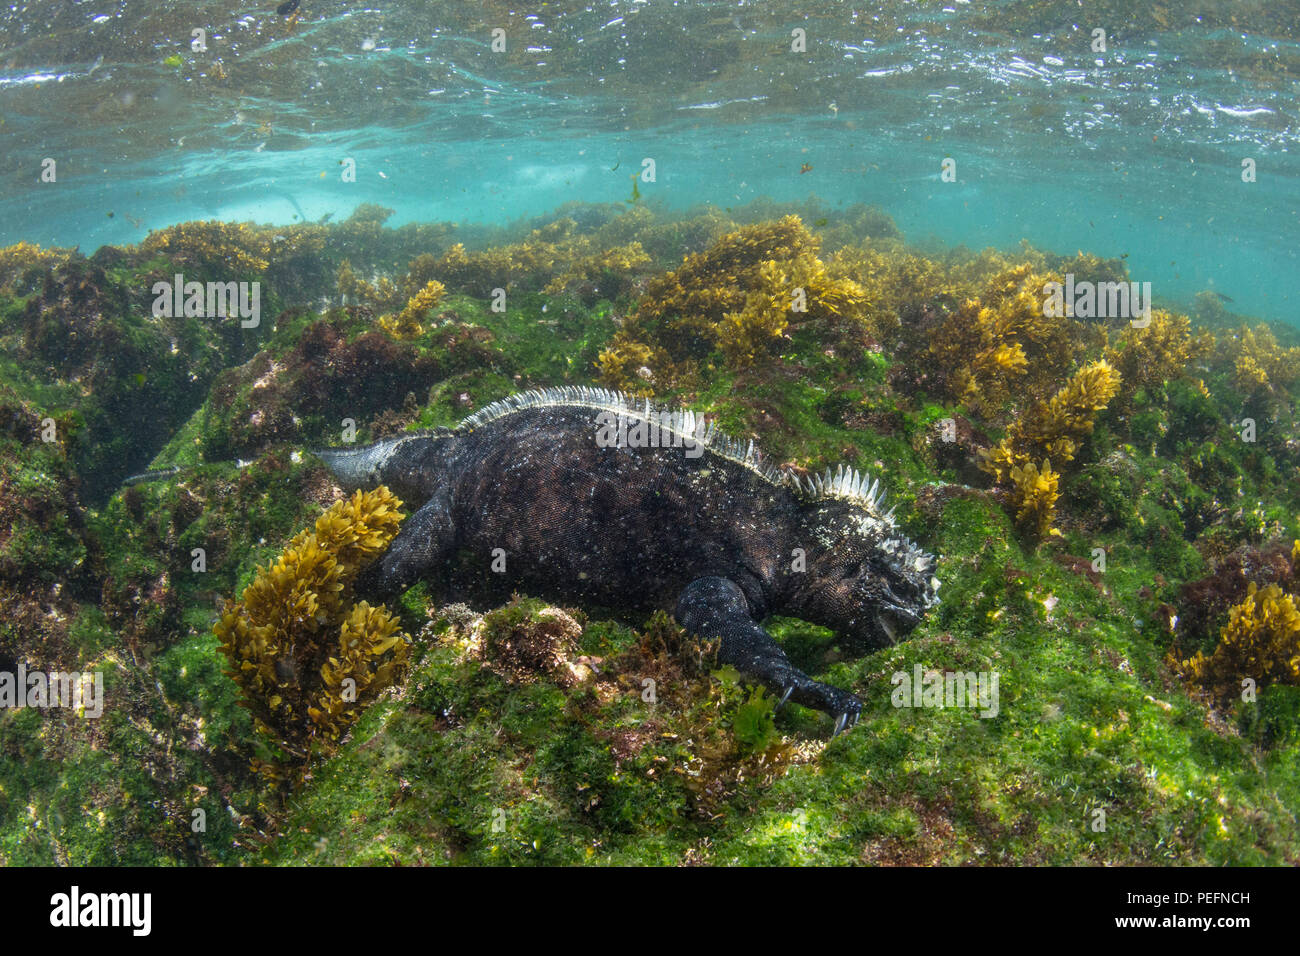 The endemic Galápagos marine iguana, Amblyrhynchus cristatus, feeding underwater, Fernandina Island, Galápagos. Stock Photo